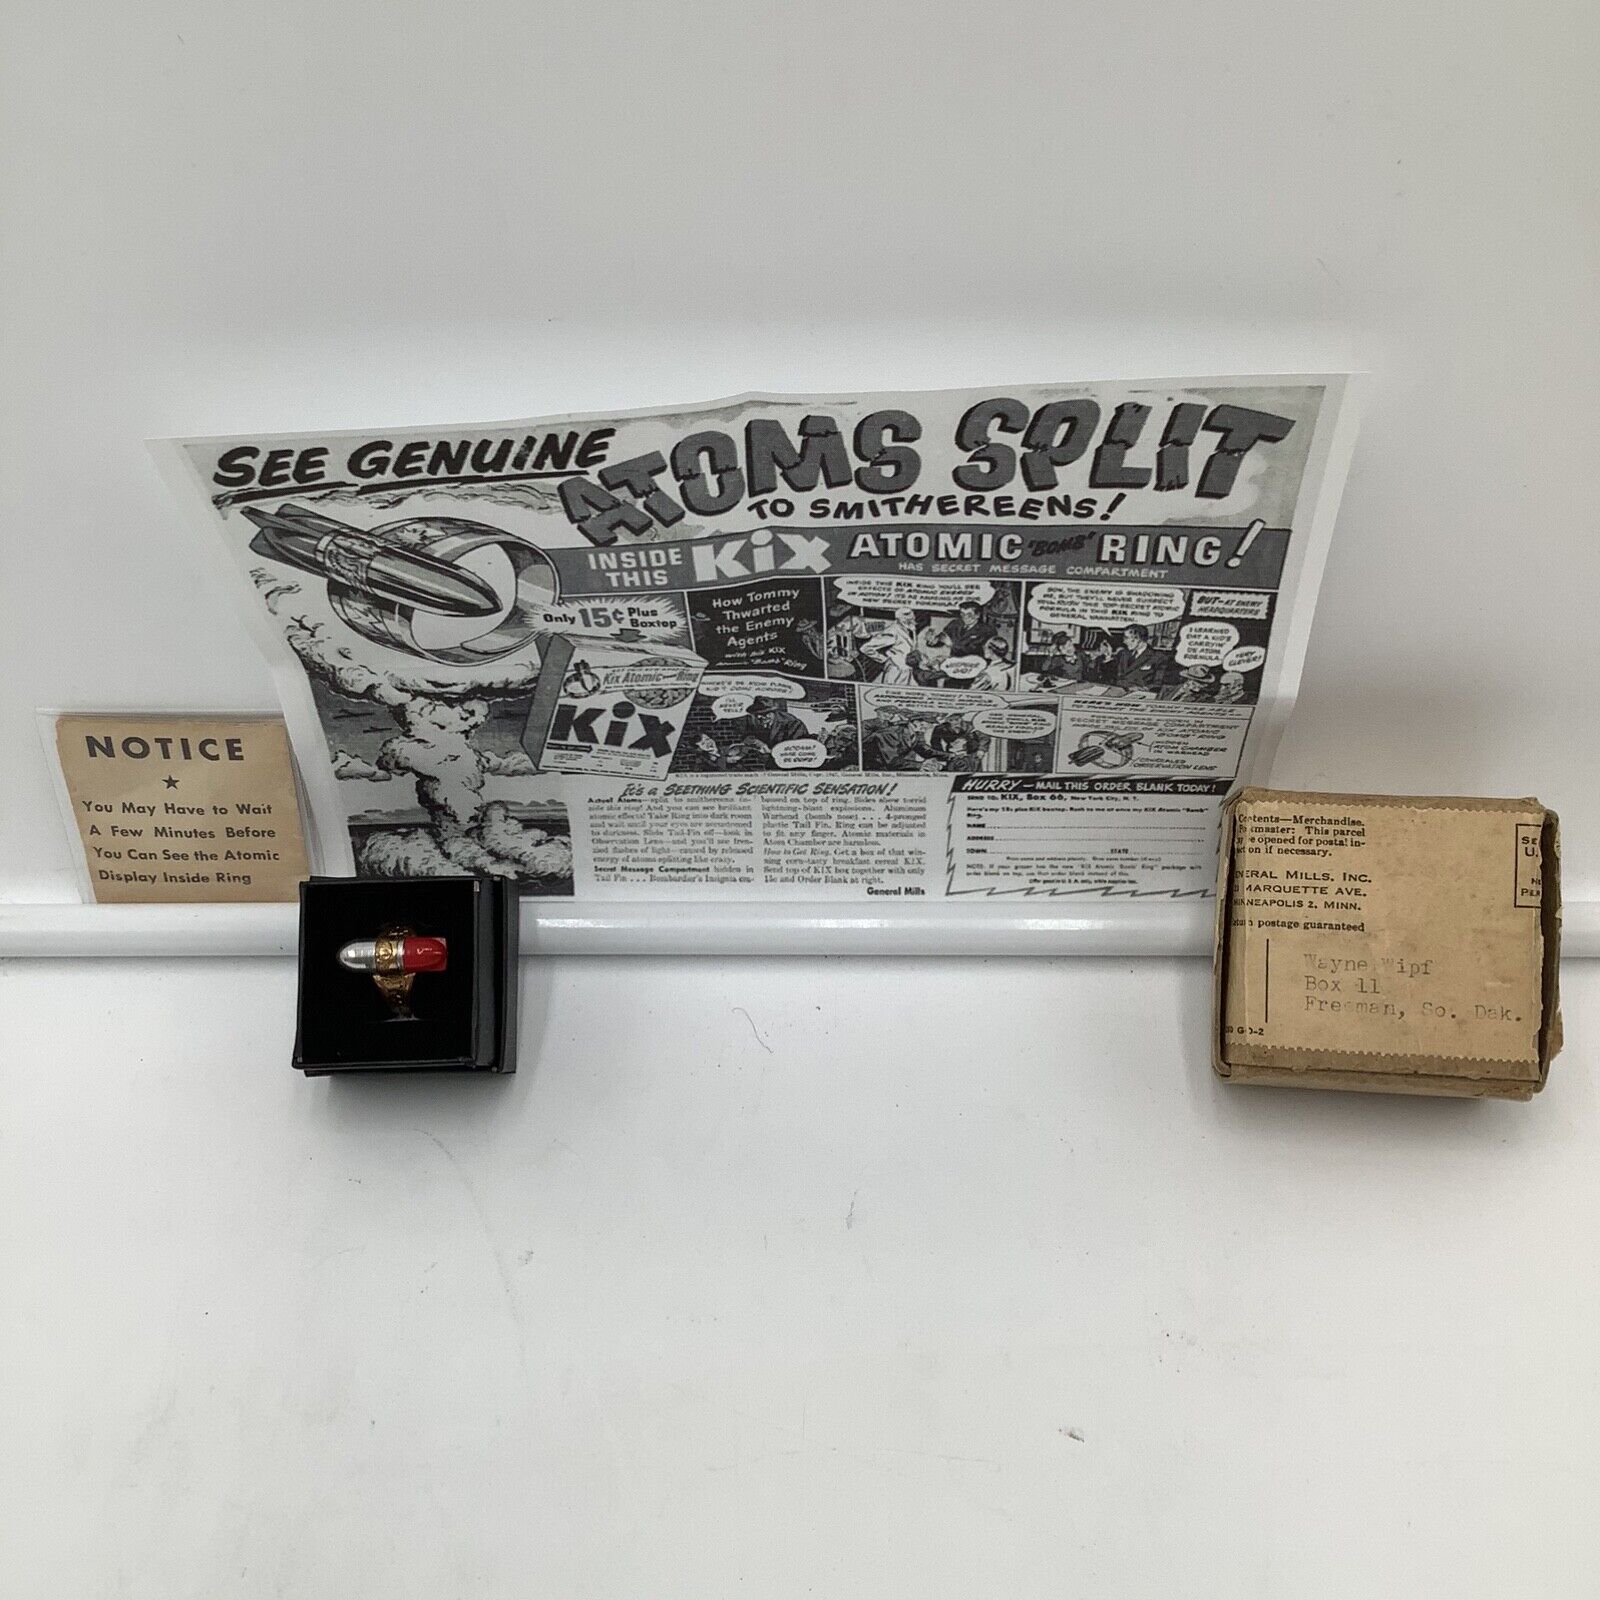 1947 Lone Ranger Atomic Bomb Adjustable Ring Original Box & Instructions